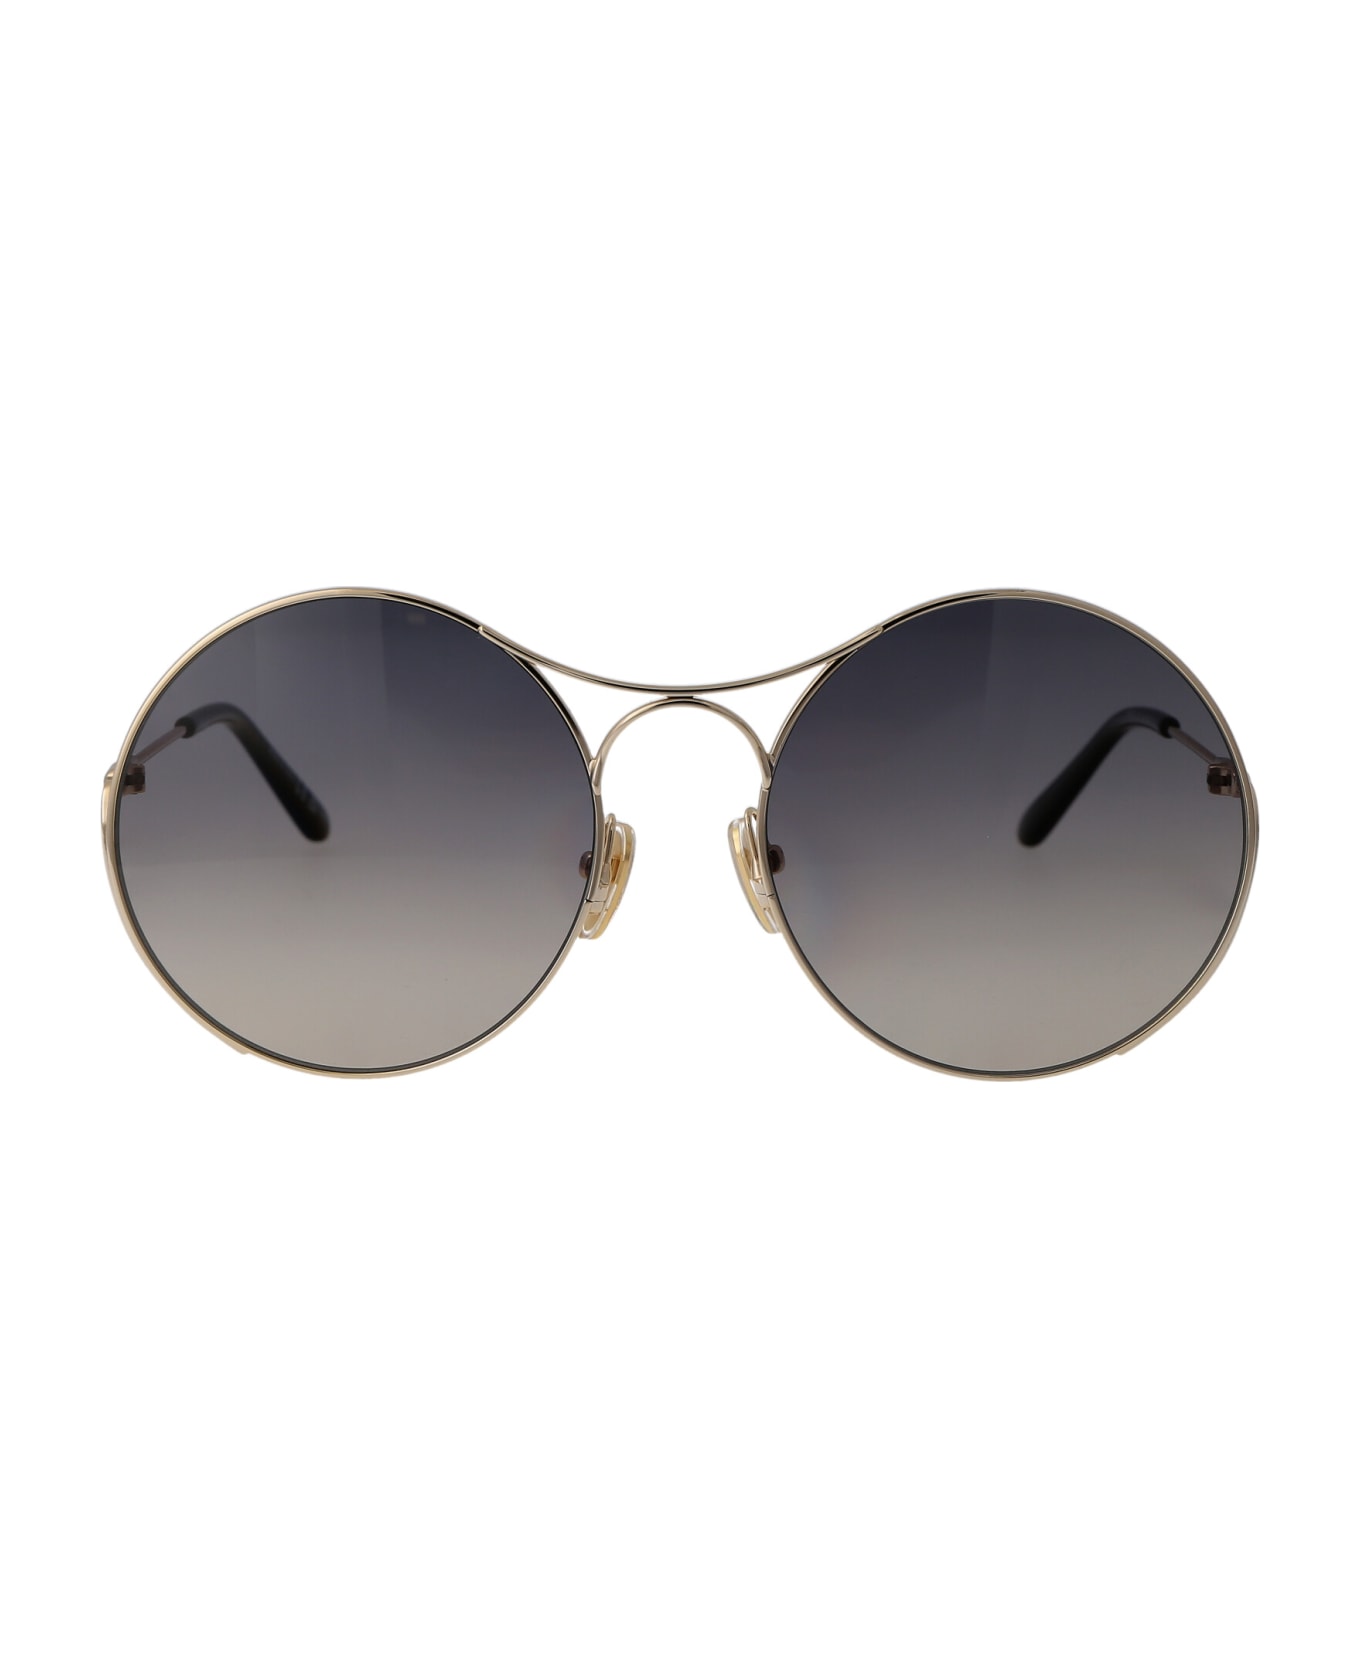 Chloé Eyewear Ch0166s Sunglasses - 001 GOLD GOLD GREY